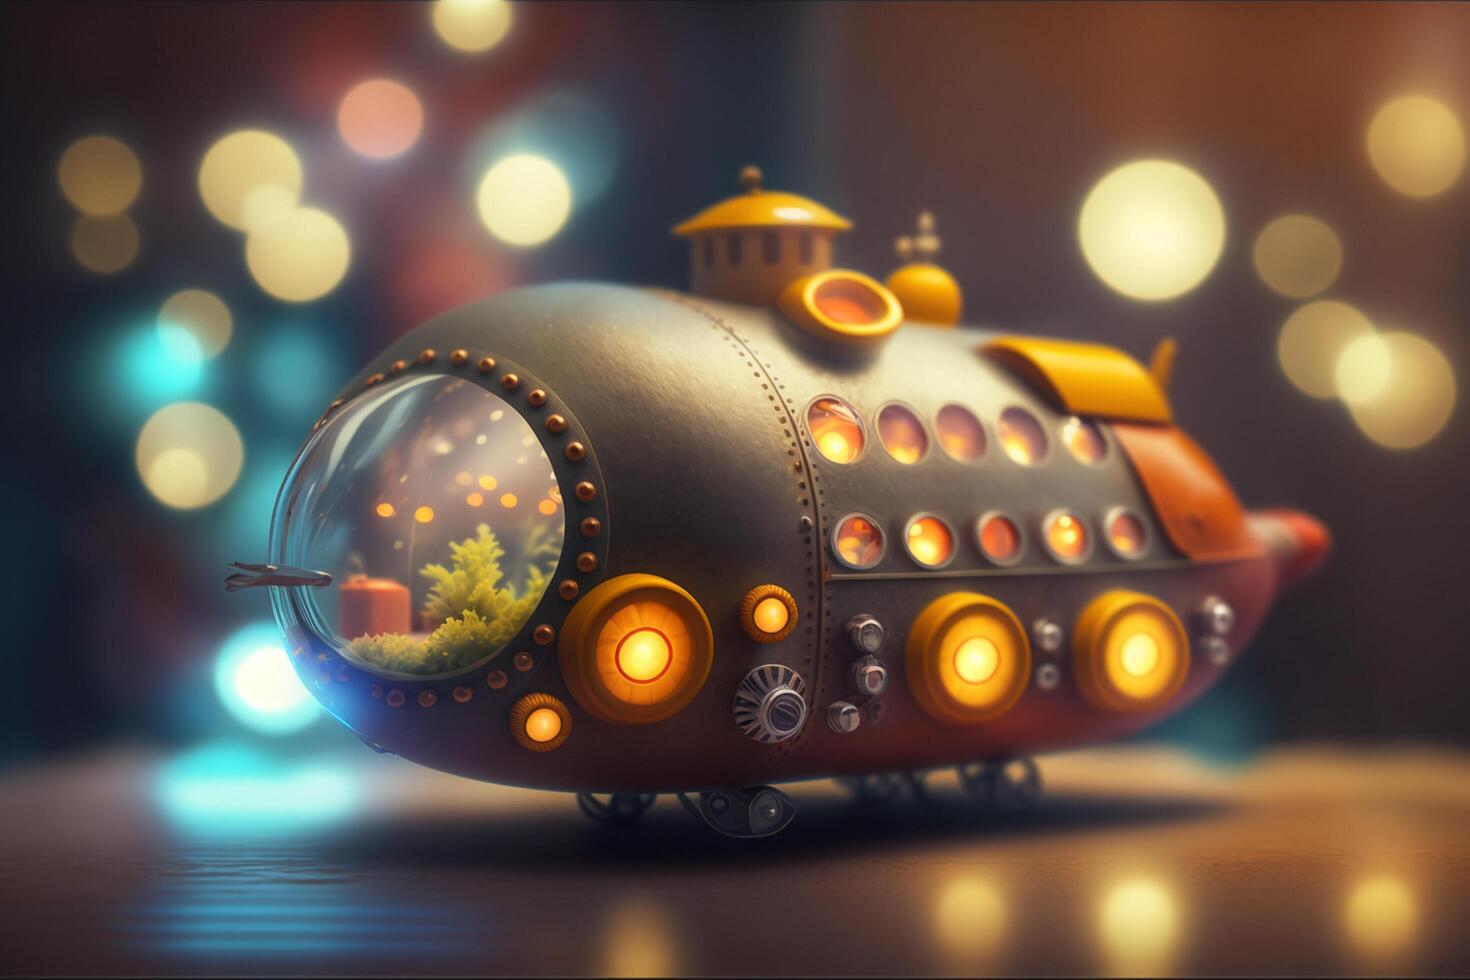 Fantastical Underwater Toy Submarine with Illumination and Whimsical Design photo